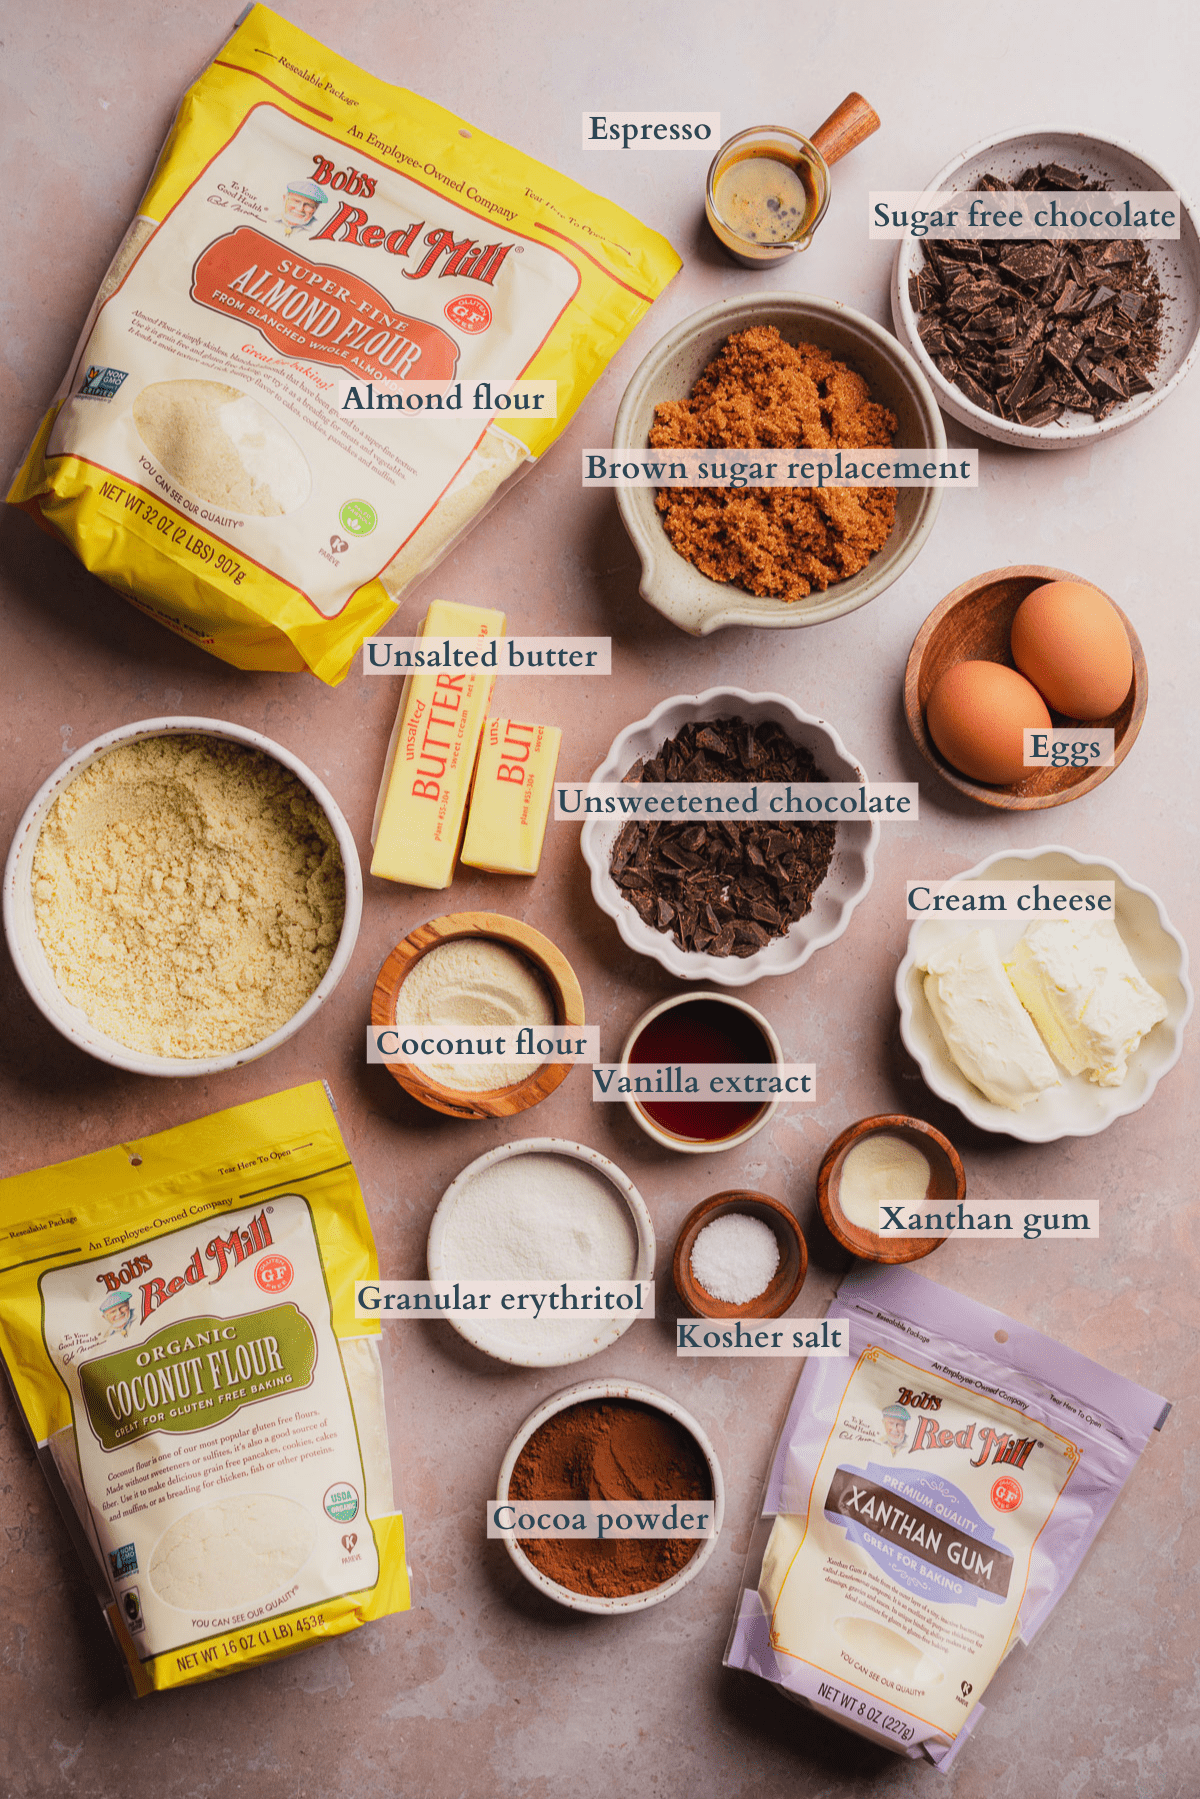 brownie blondies ingredients graphic with text to denote different ingredients